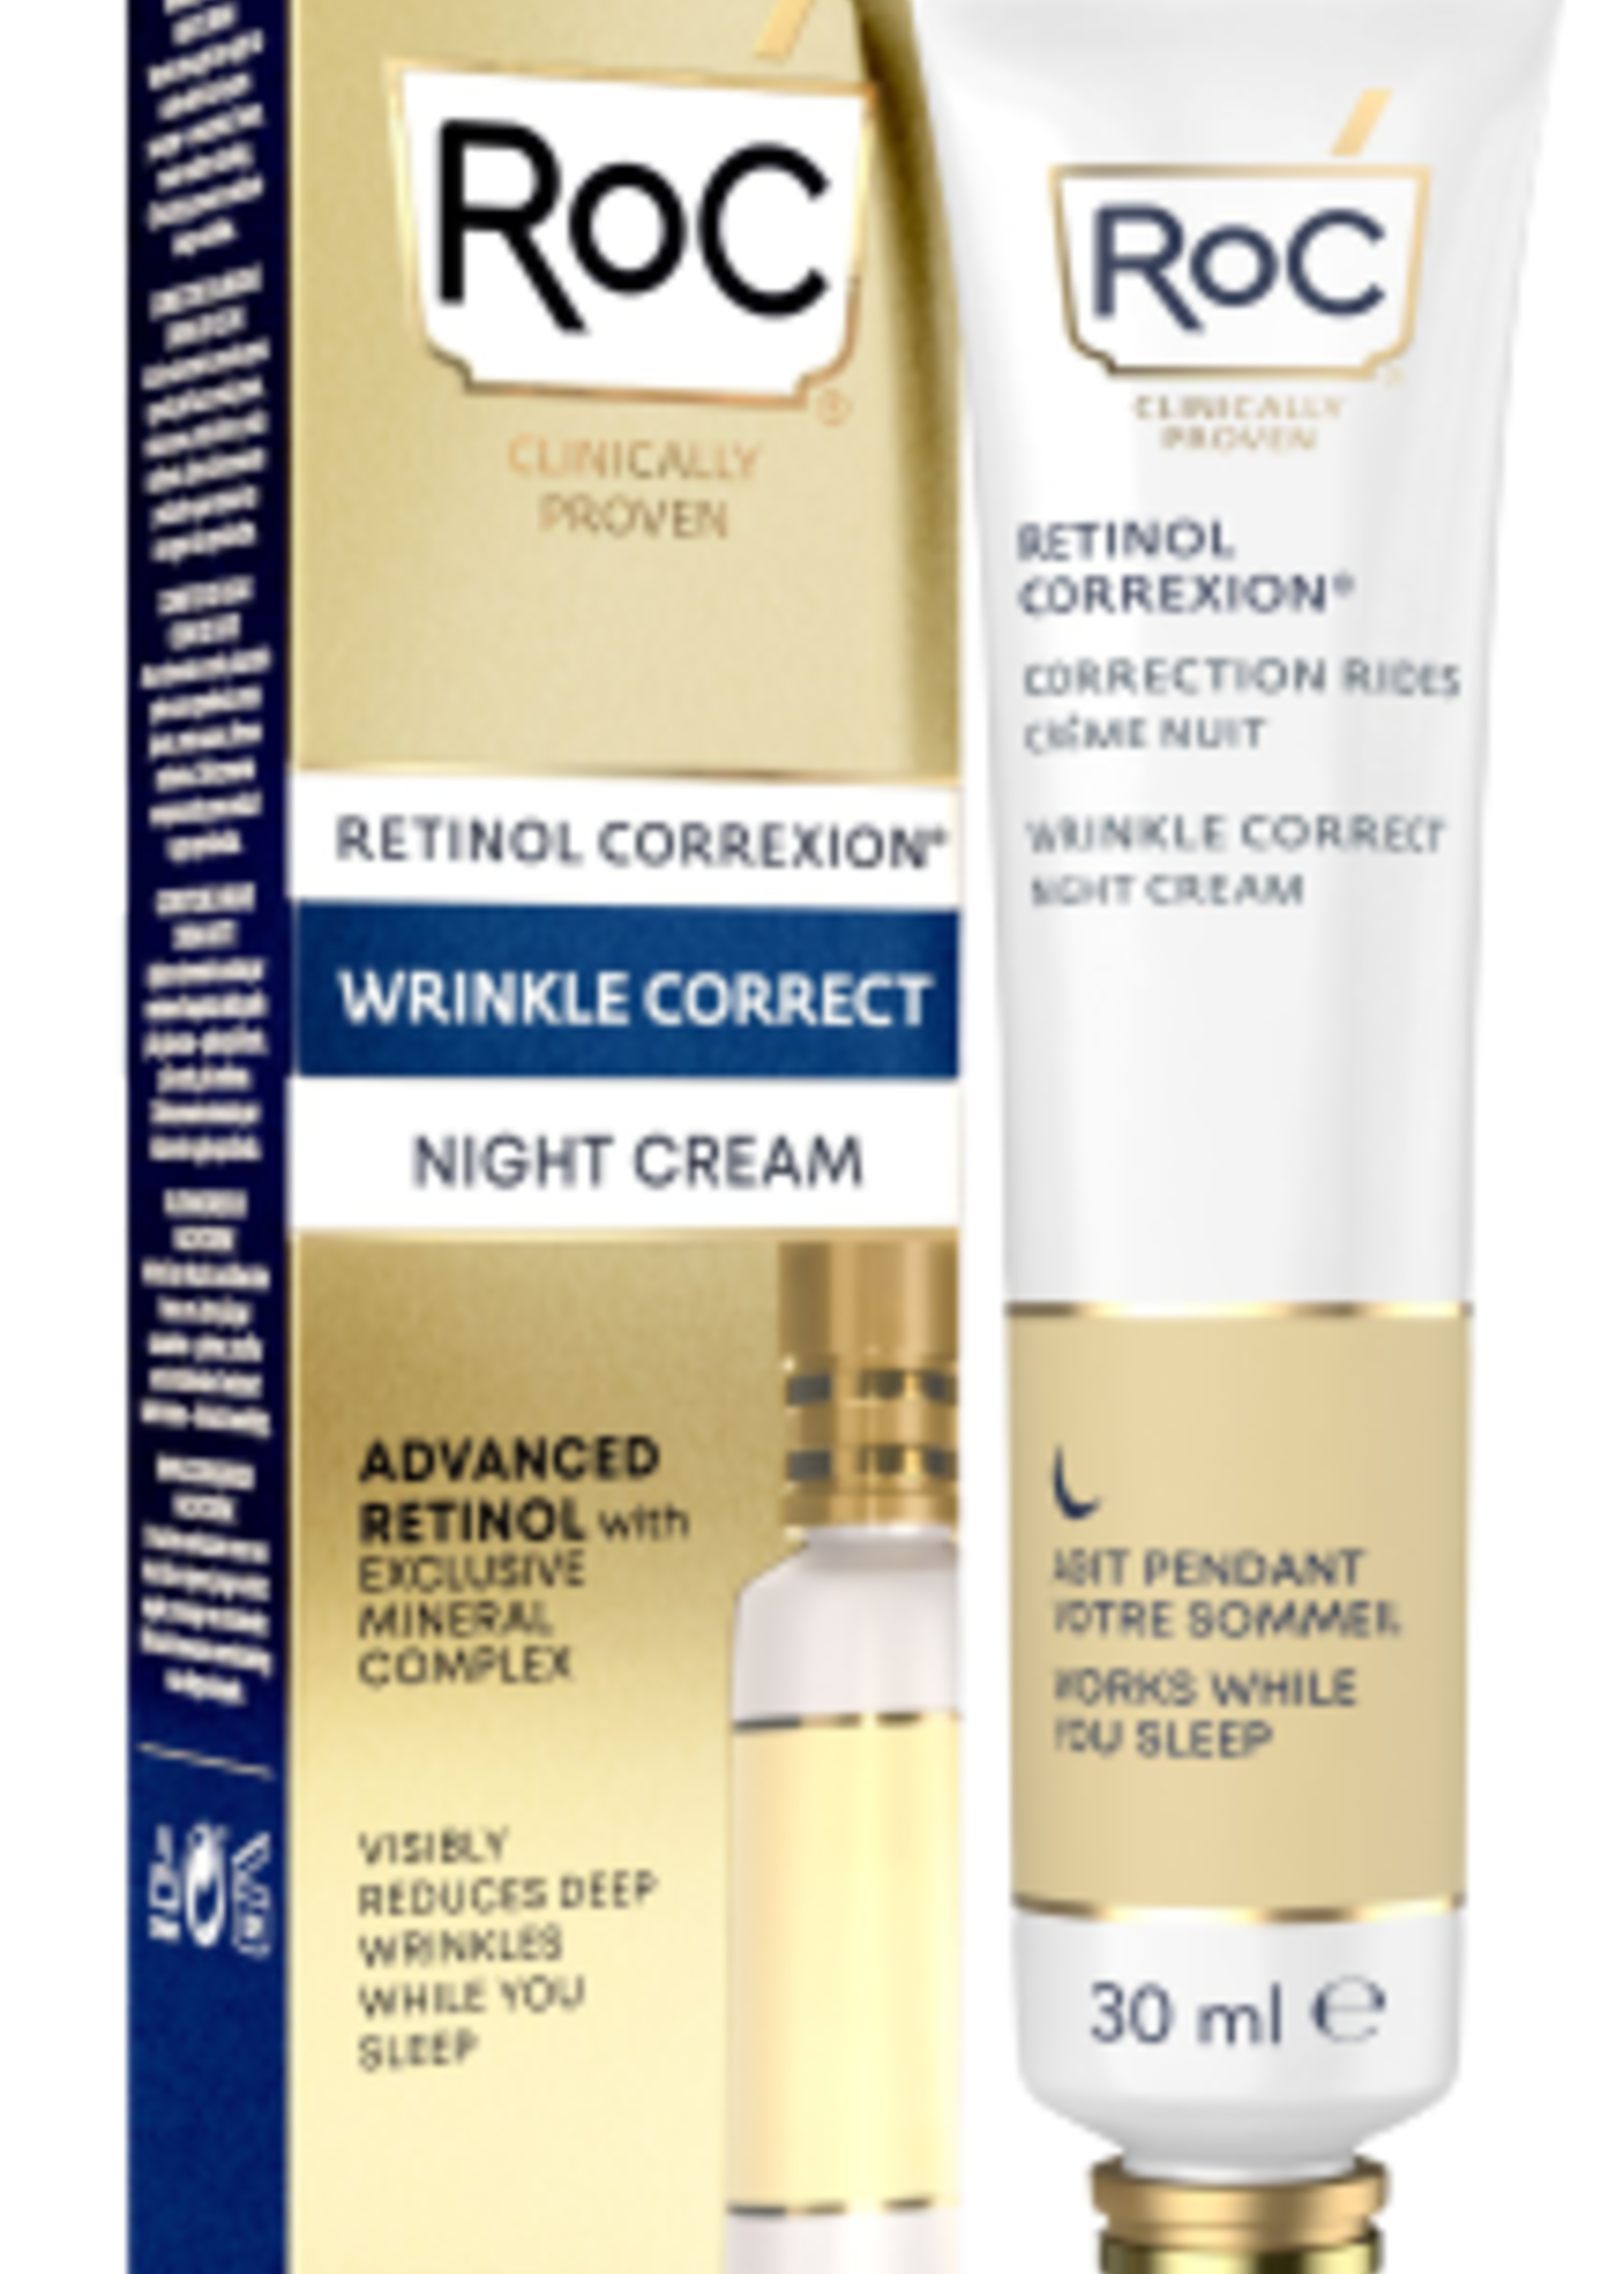 RoC Retinol correxion wrinkle correct night cream 30ml